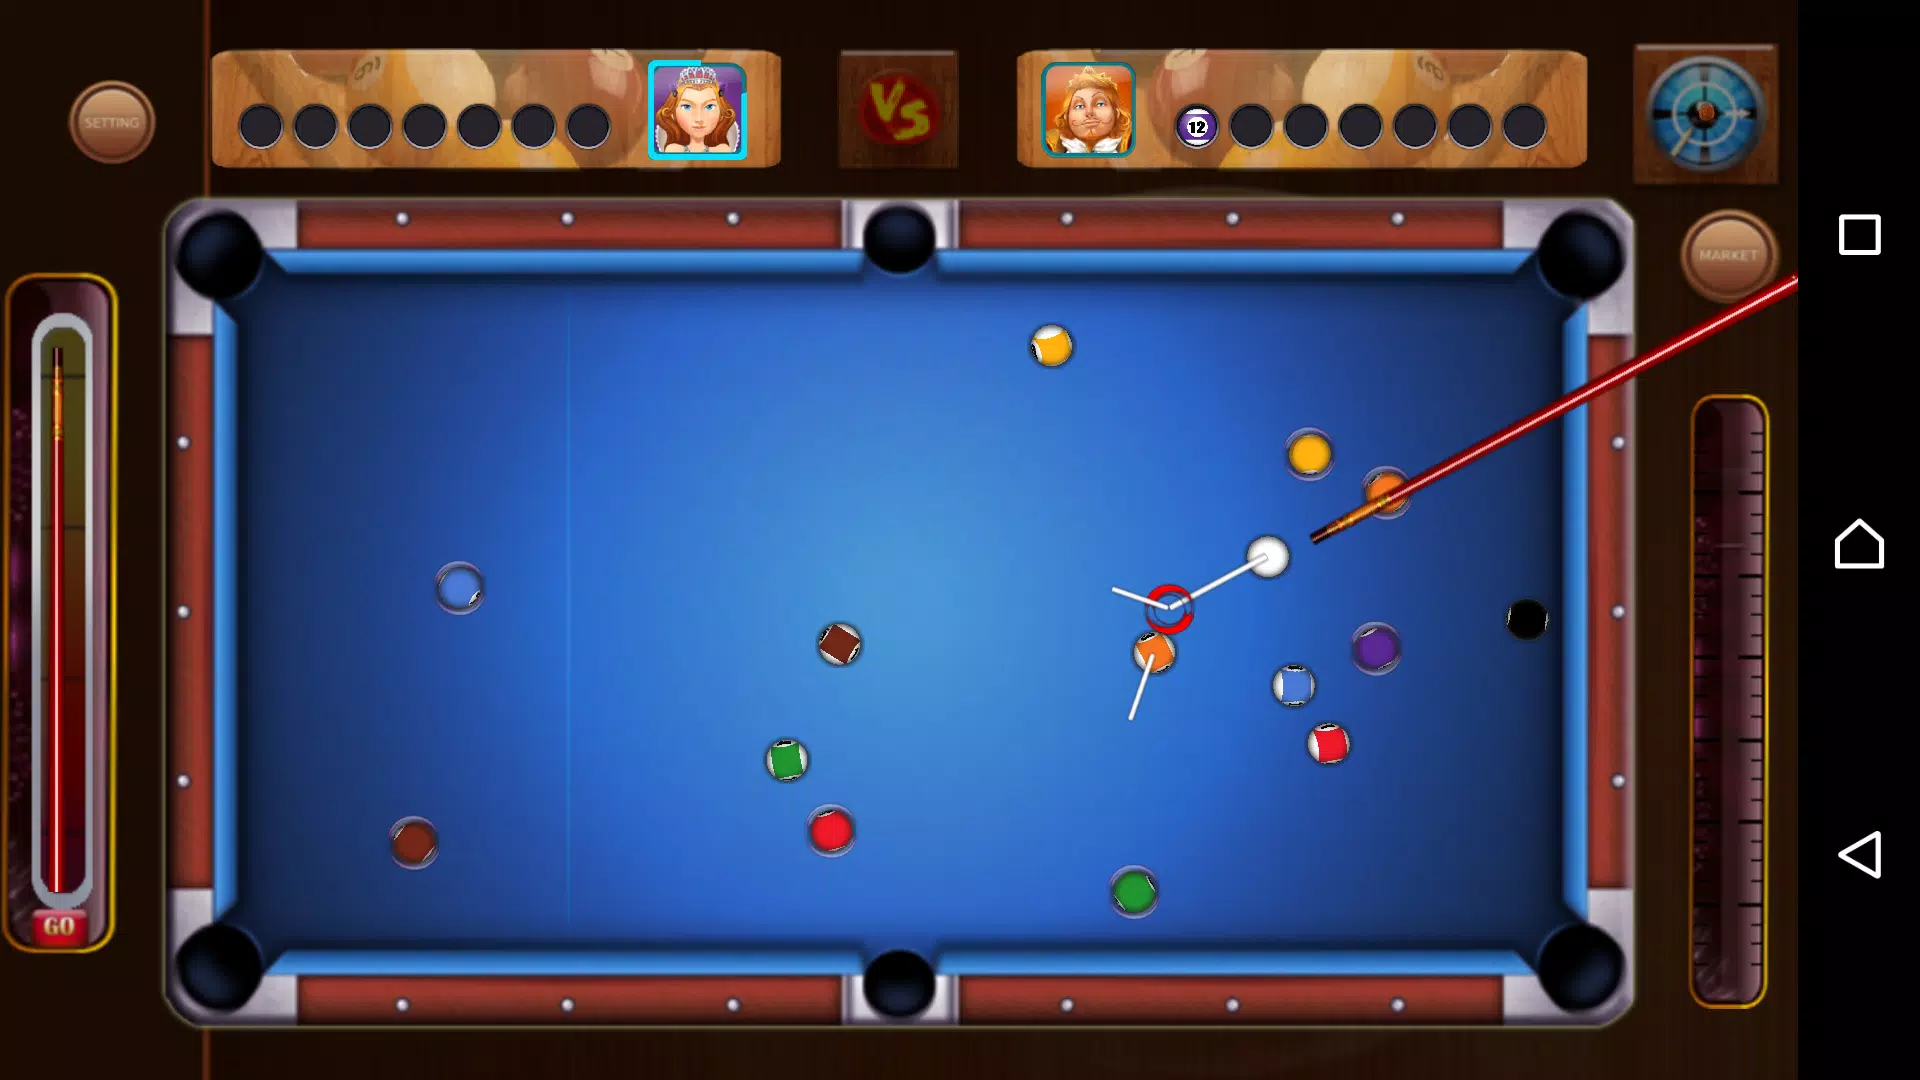 Pool Billiards offline - Apps on Google Play